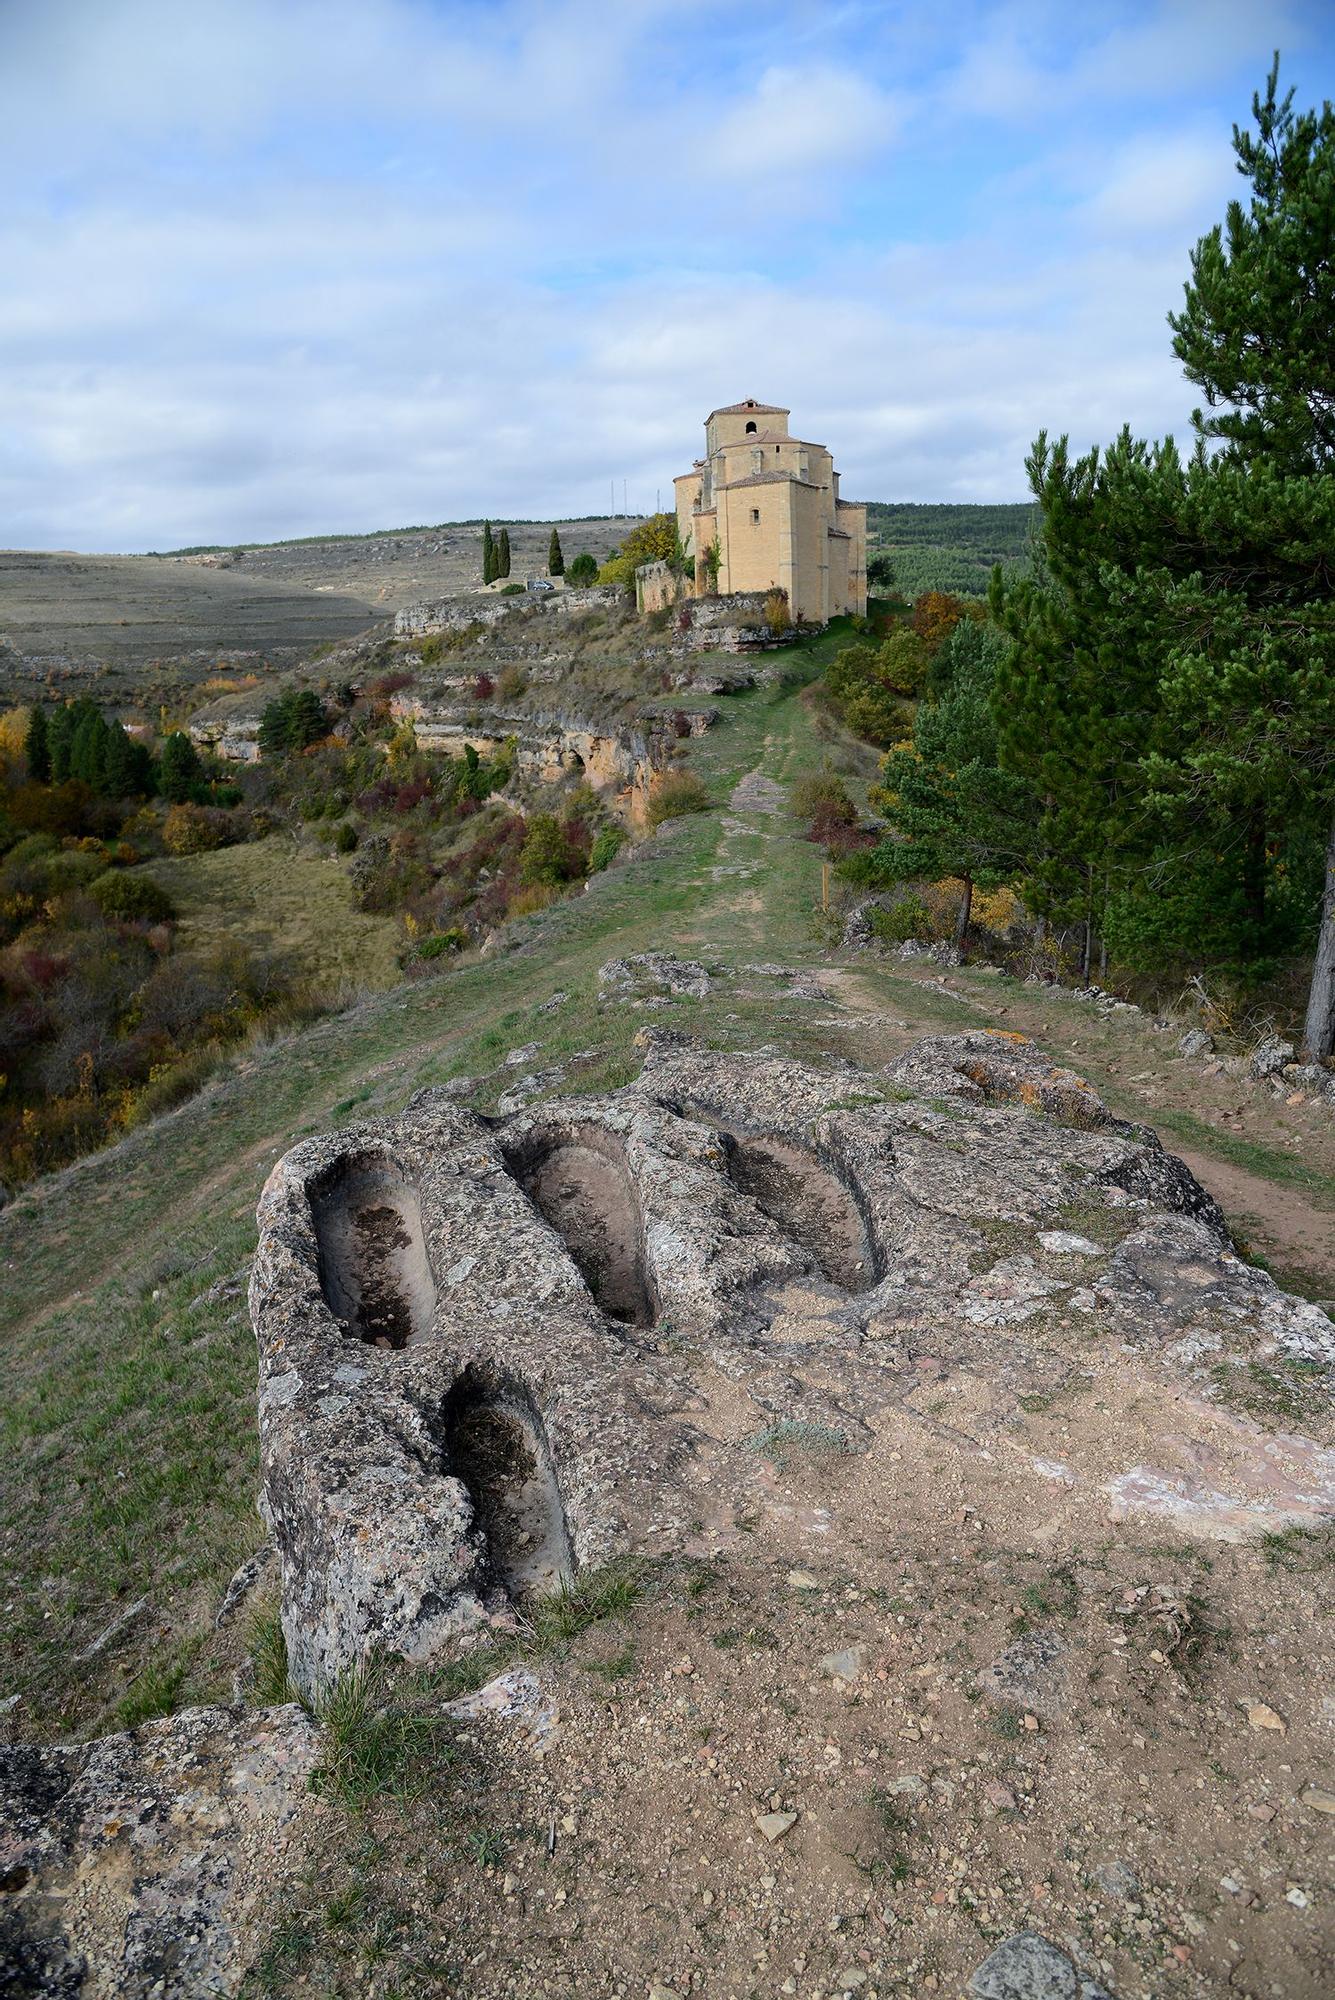 Necrópolis con tumbas antropomorfas y parroquia de Santa María en Sedano.